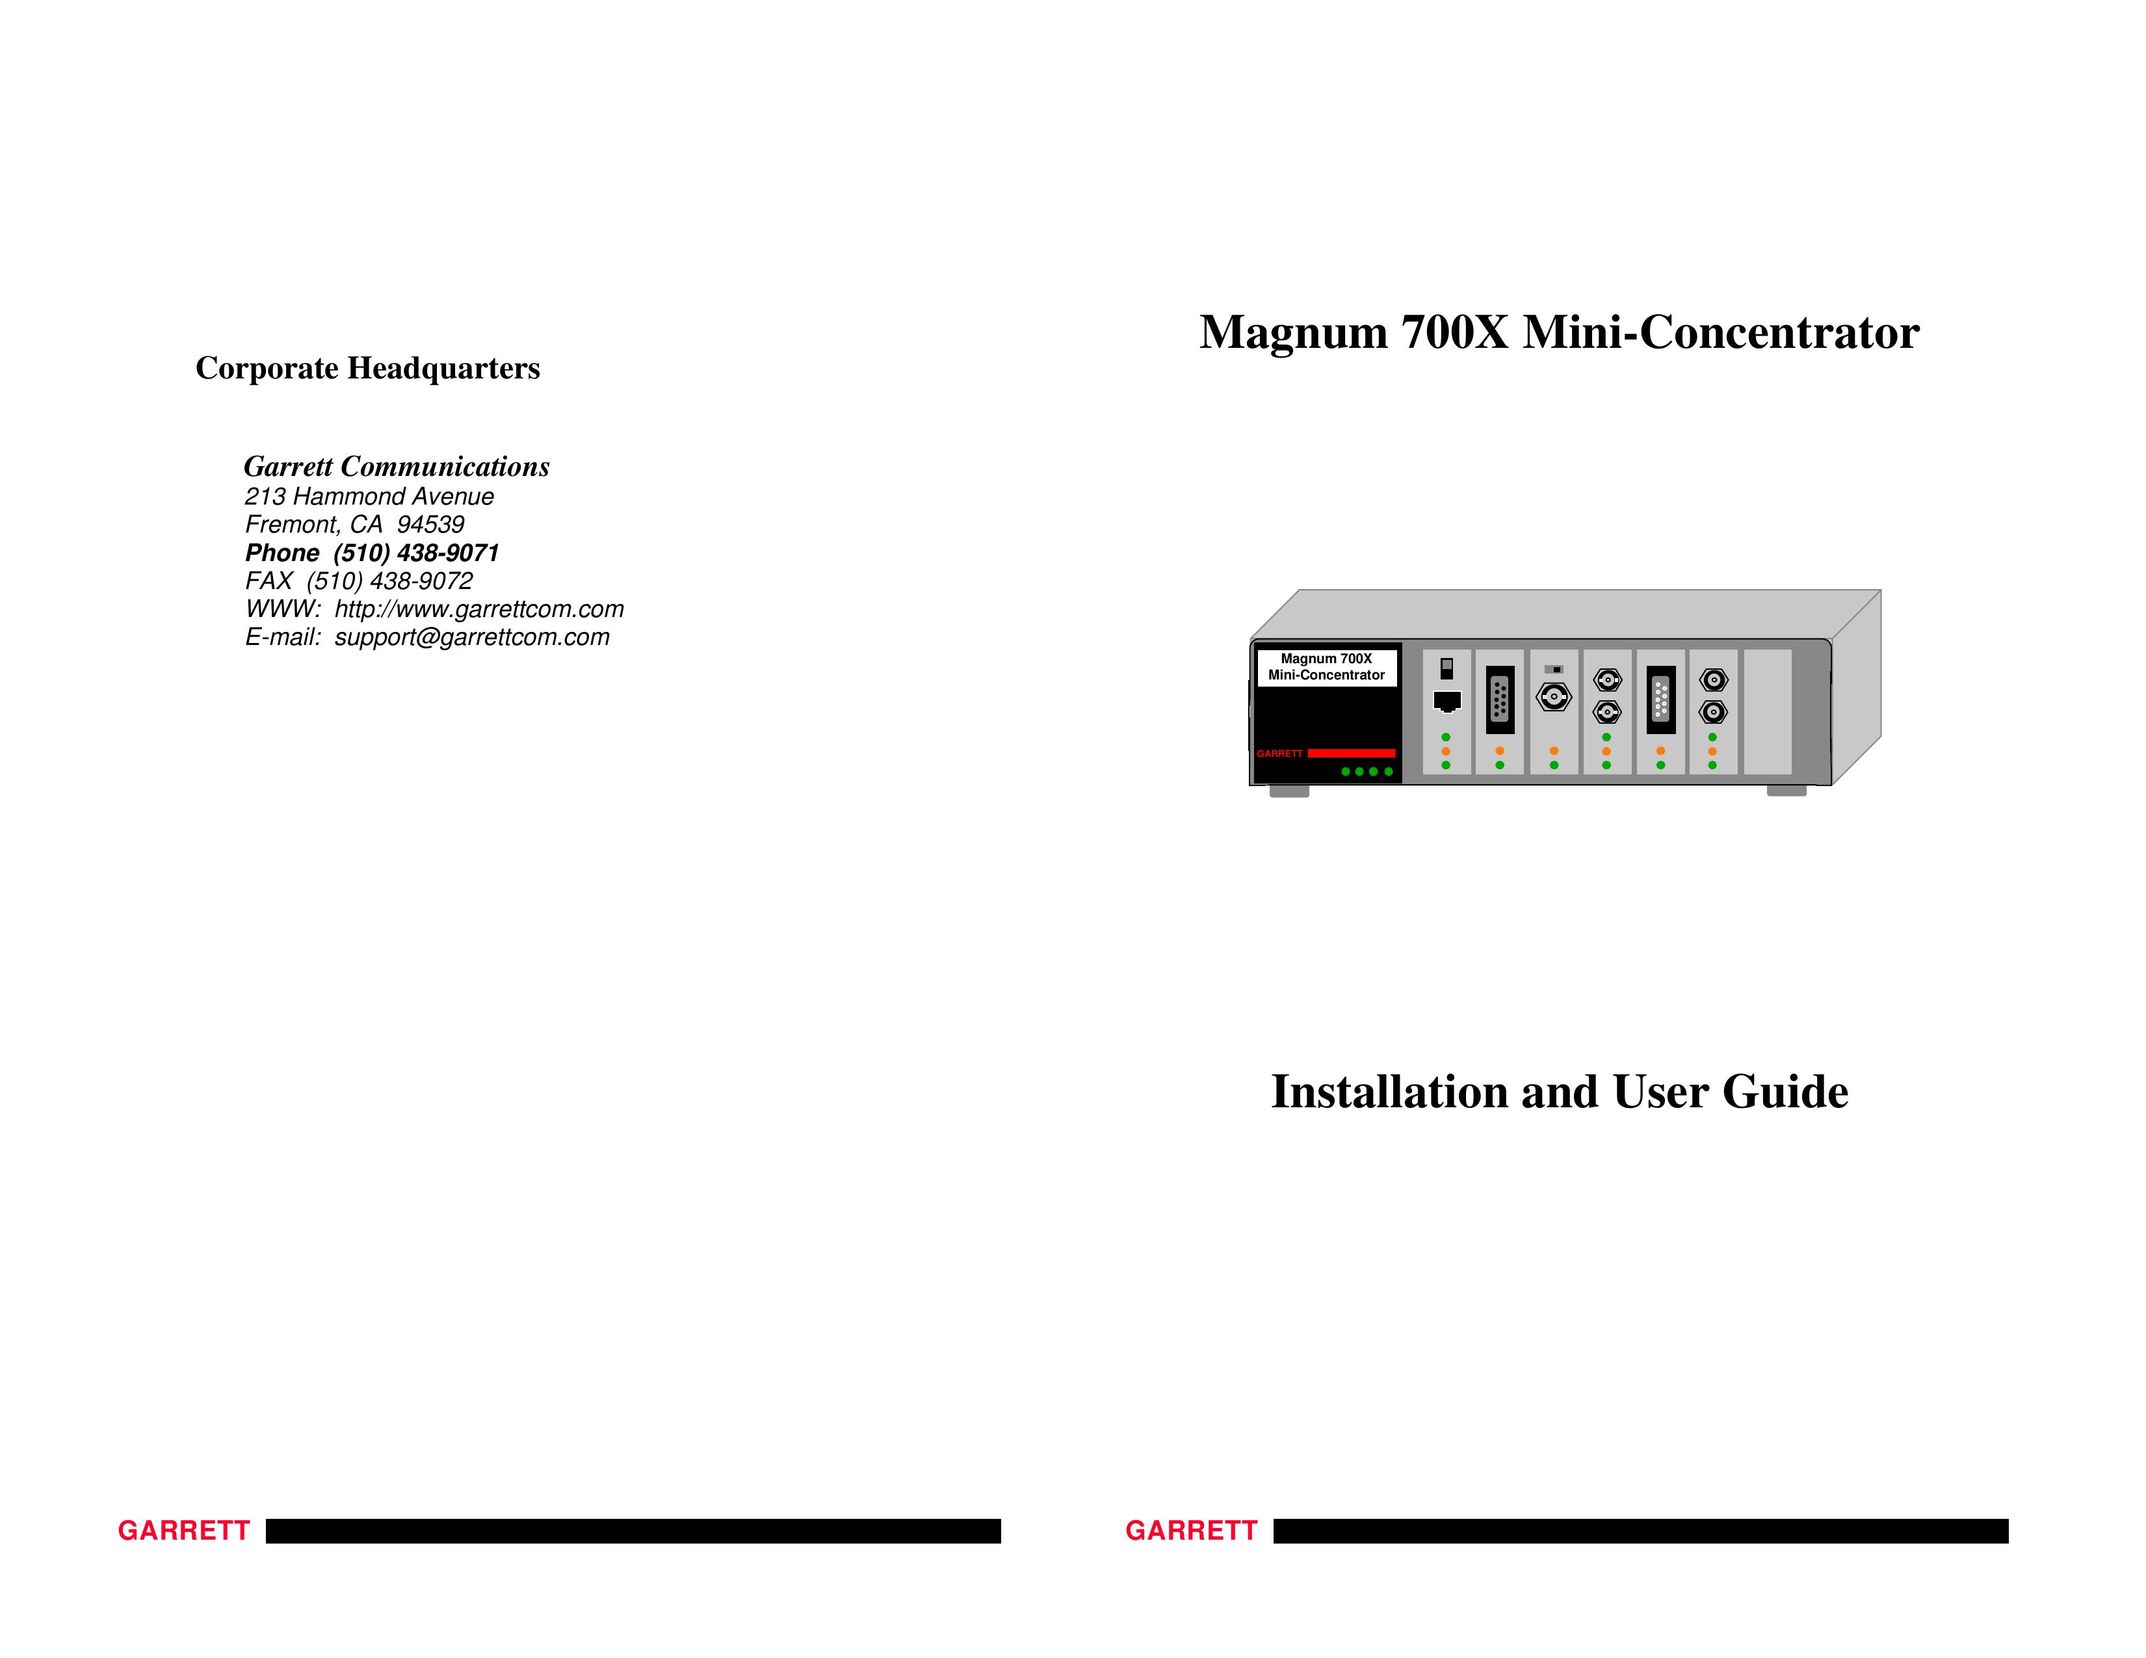 GarrettCom Magnum 700X Network Router User Manual